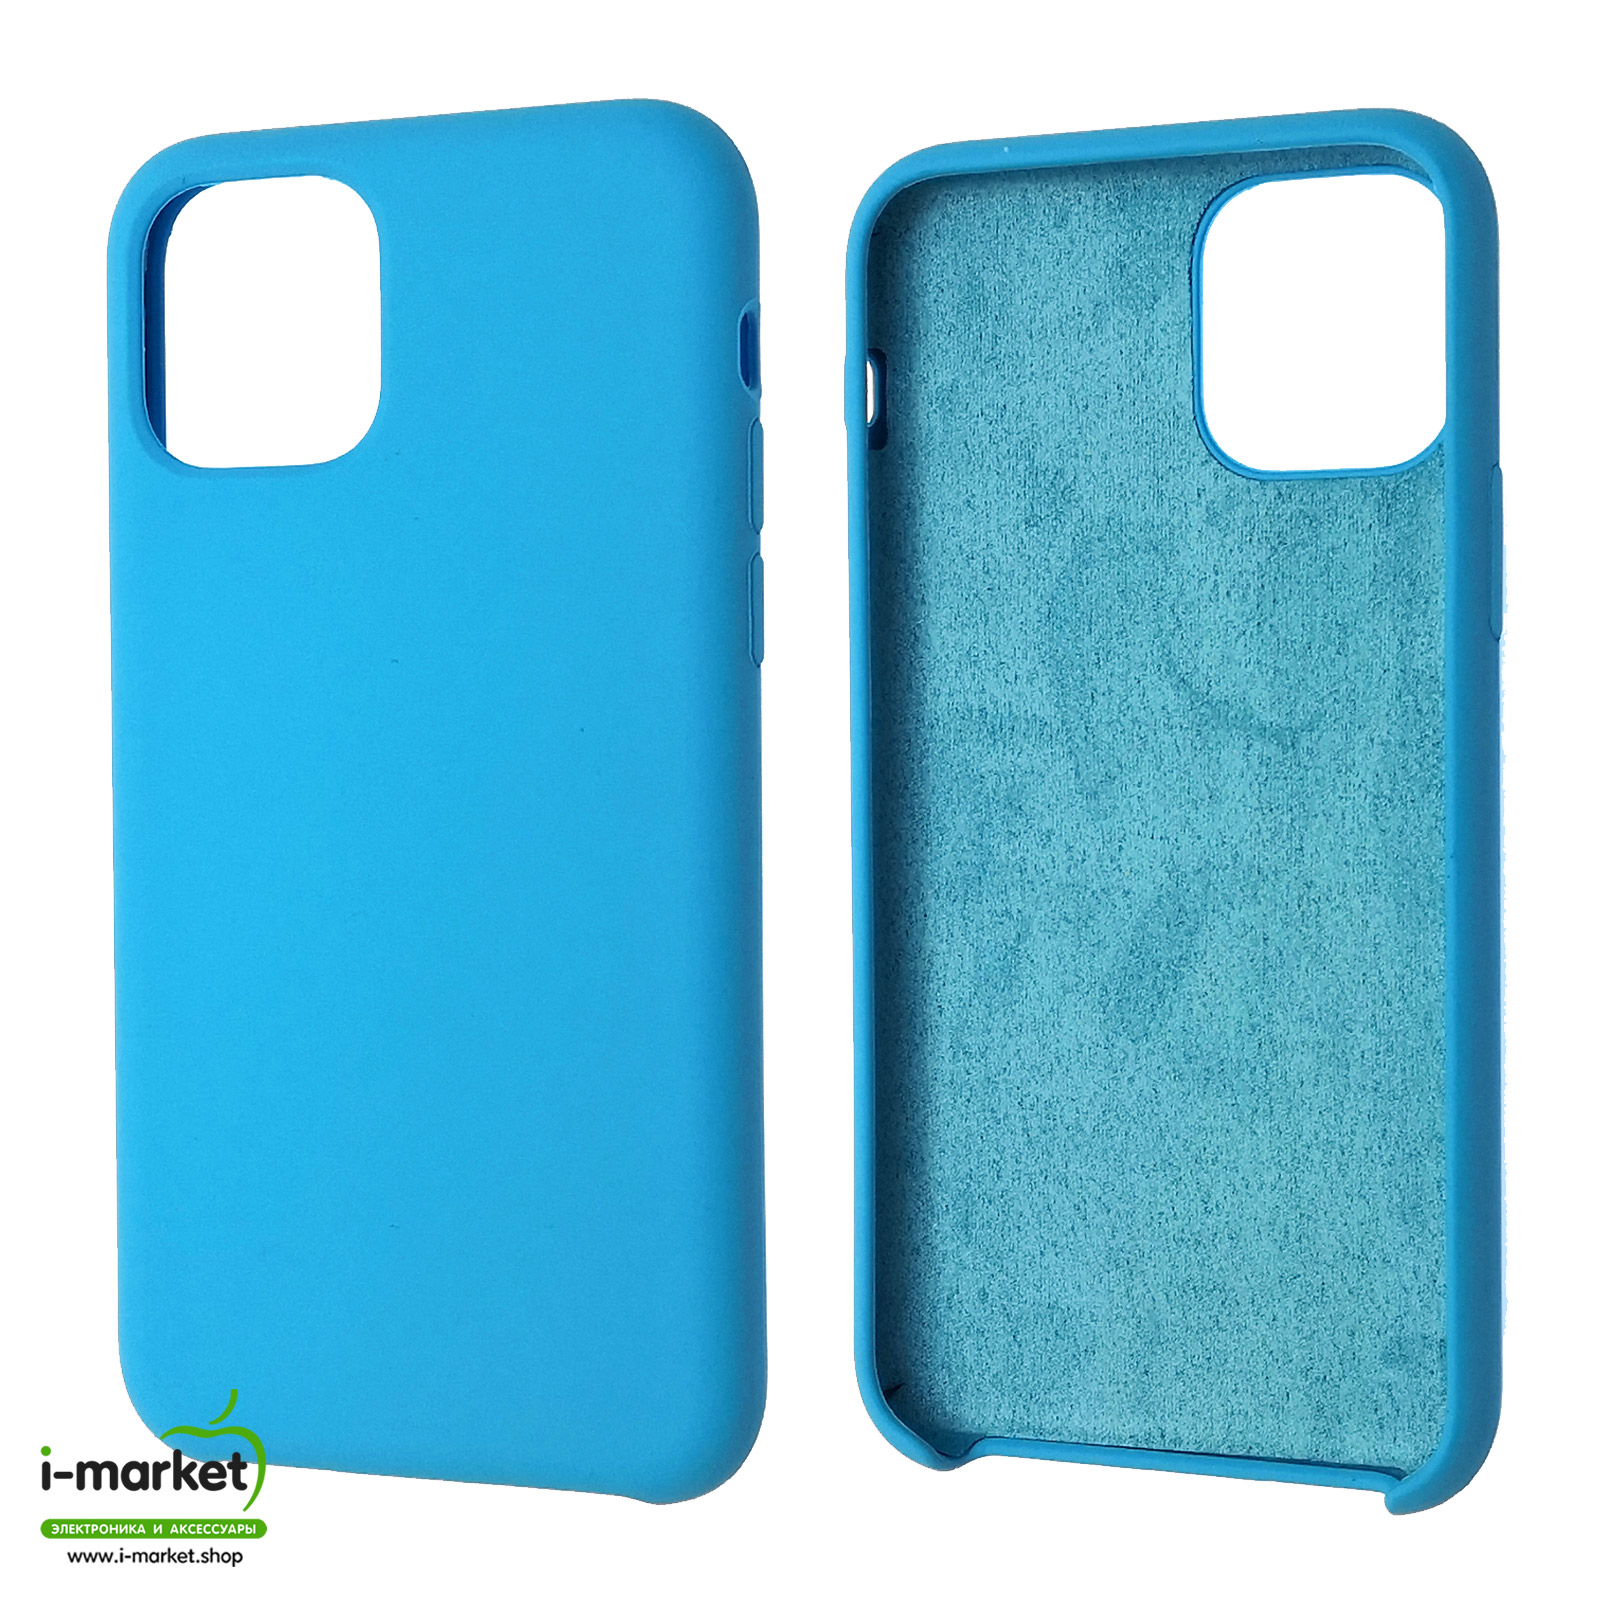 Чехол накладка Silicon Case для APPLE iPhone 11 Pro 2019, силикон, бархат, цвет голубой